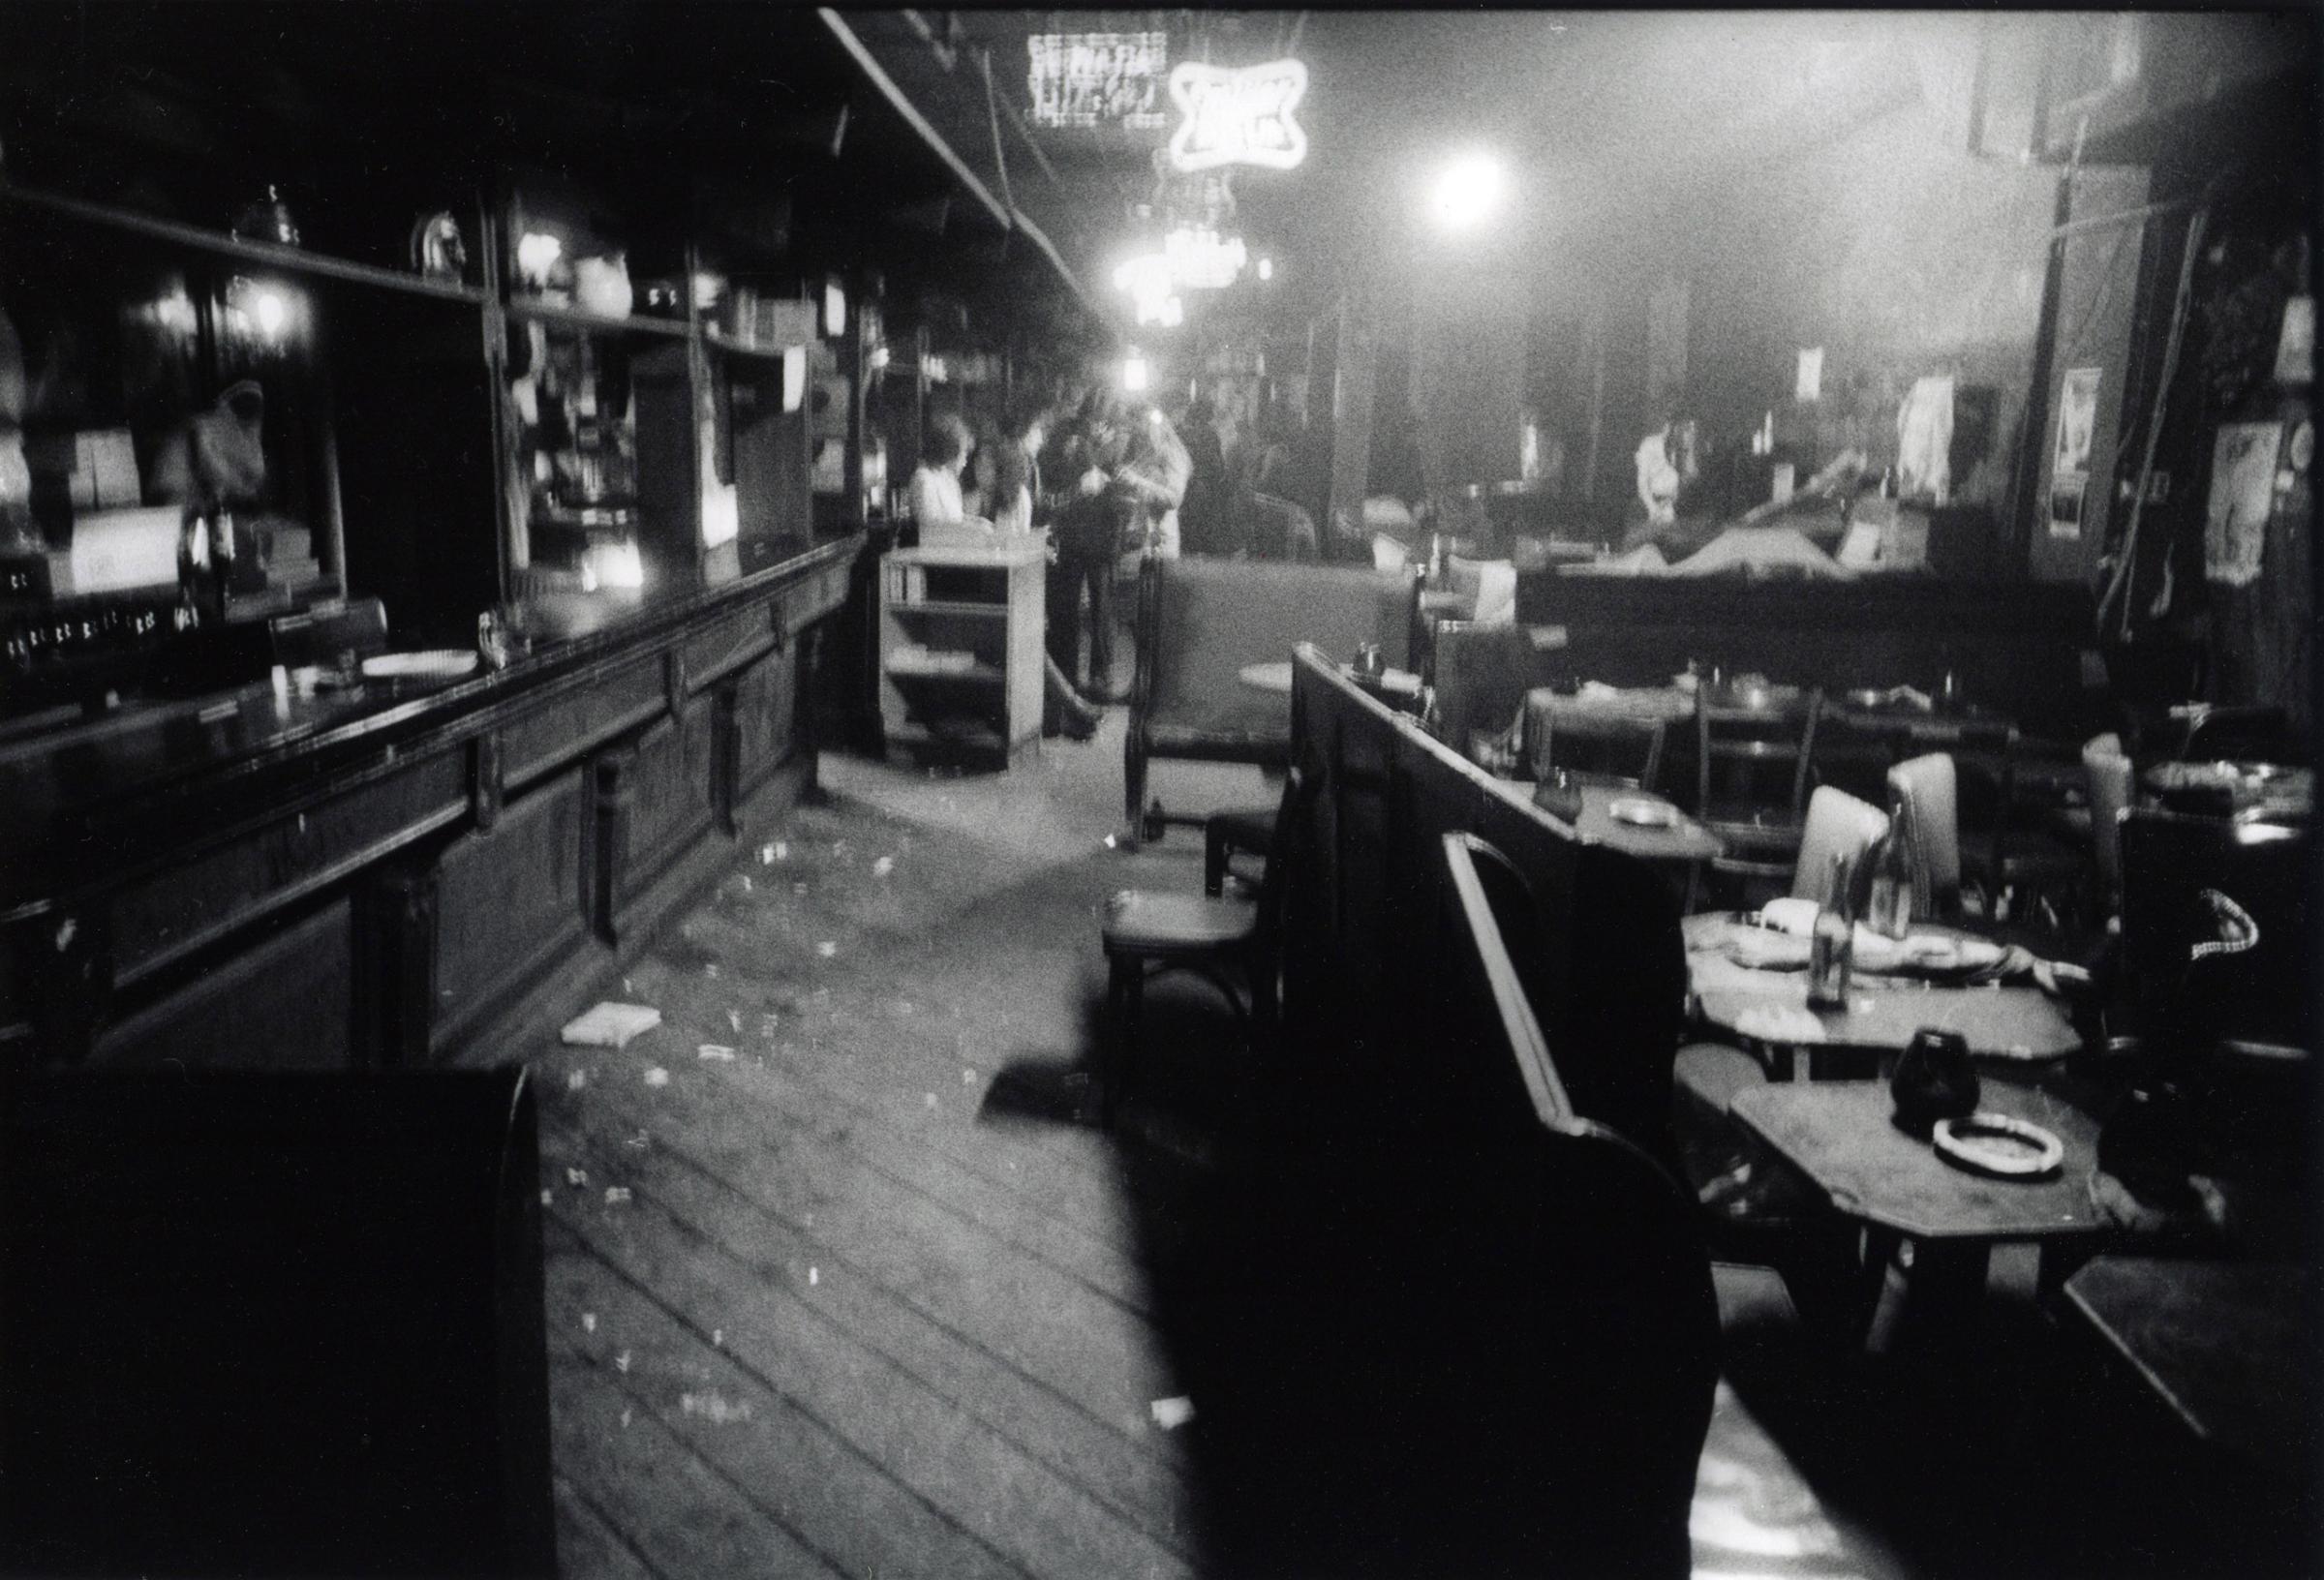 CBGB interior at closing time, 4am, 1977.